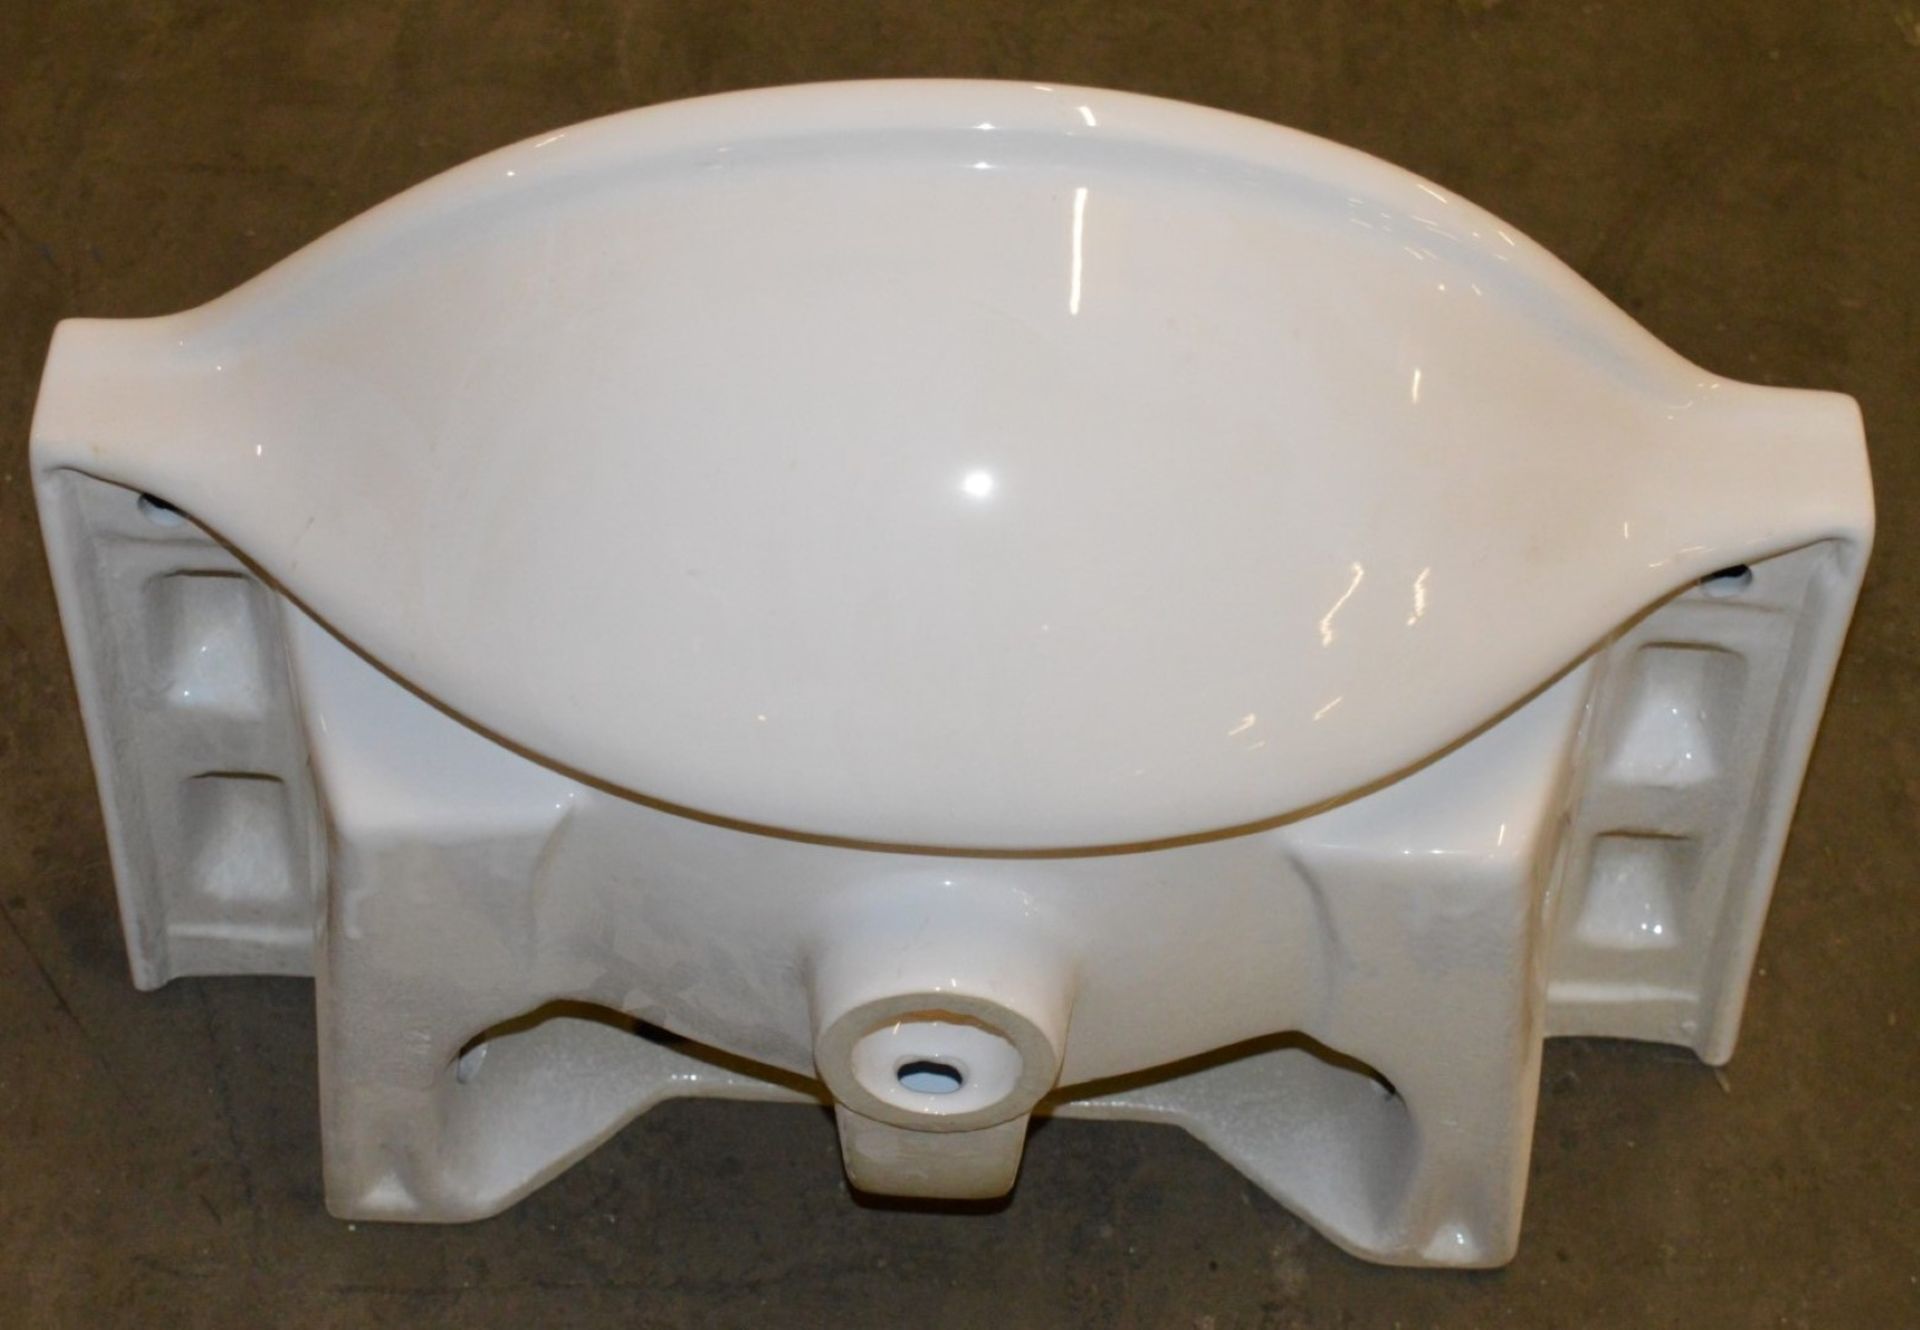 10 x Vogue Bathrooms LUNA Semi Recessed Bathroom Sink Basins - High Quality Ceramic Sink Basin - - Image 2 of 4